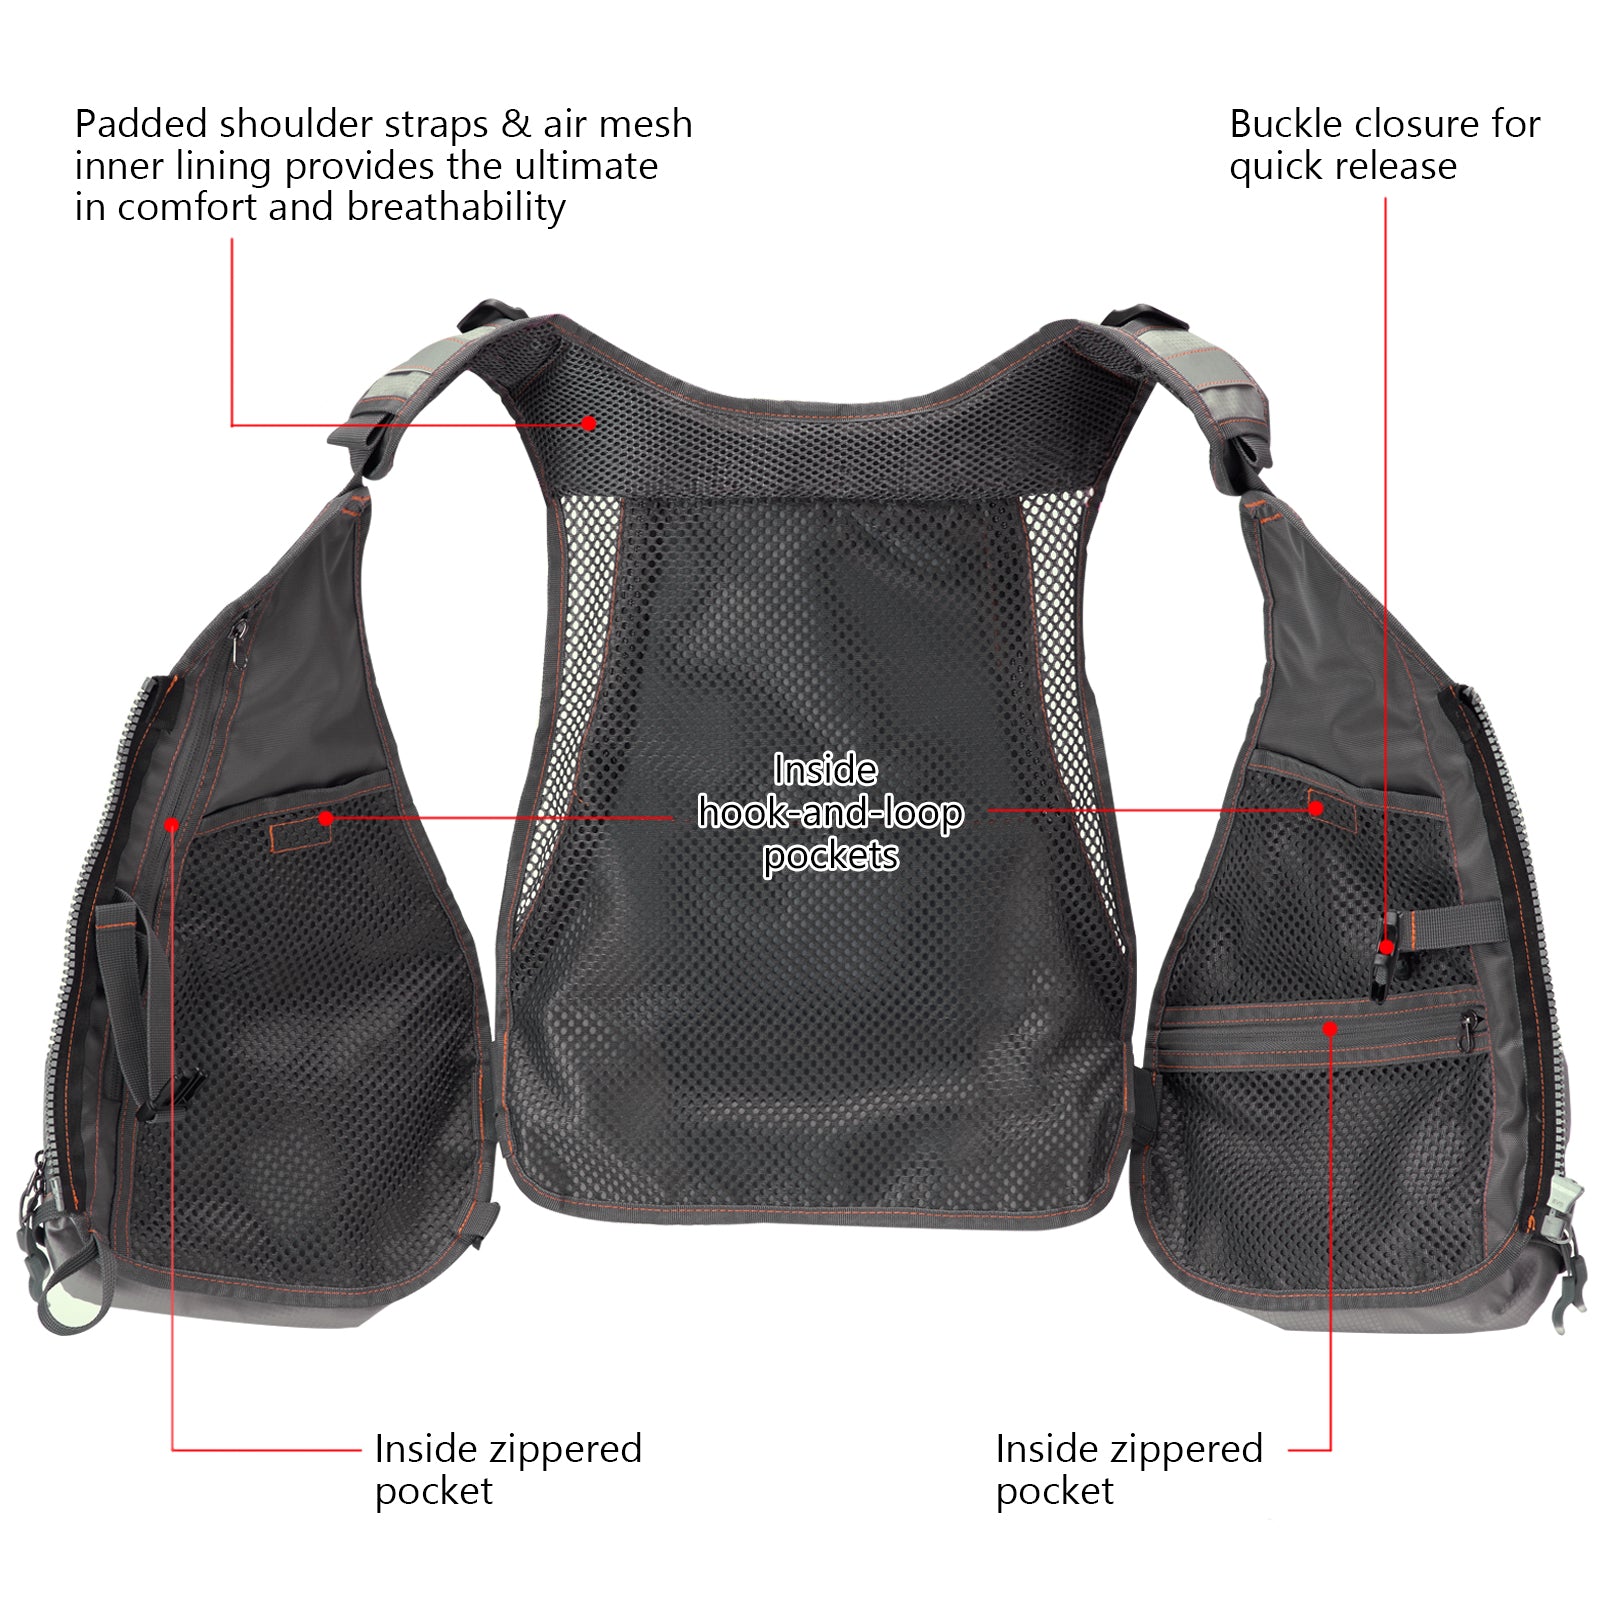 Bassdash FV07 Fly Fishing Vest for Men and Women Adjustable Size with  Detachable Water Bottle Holder